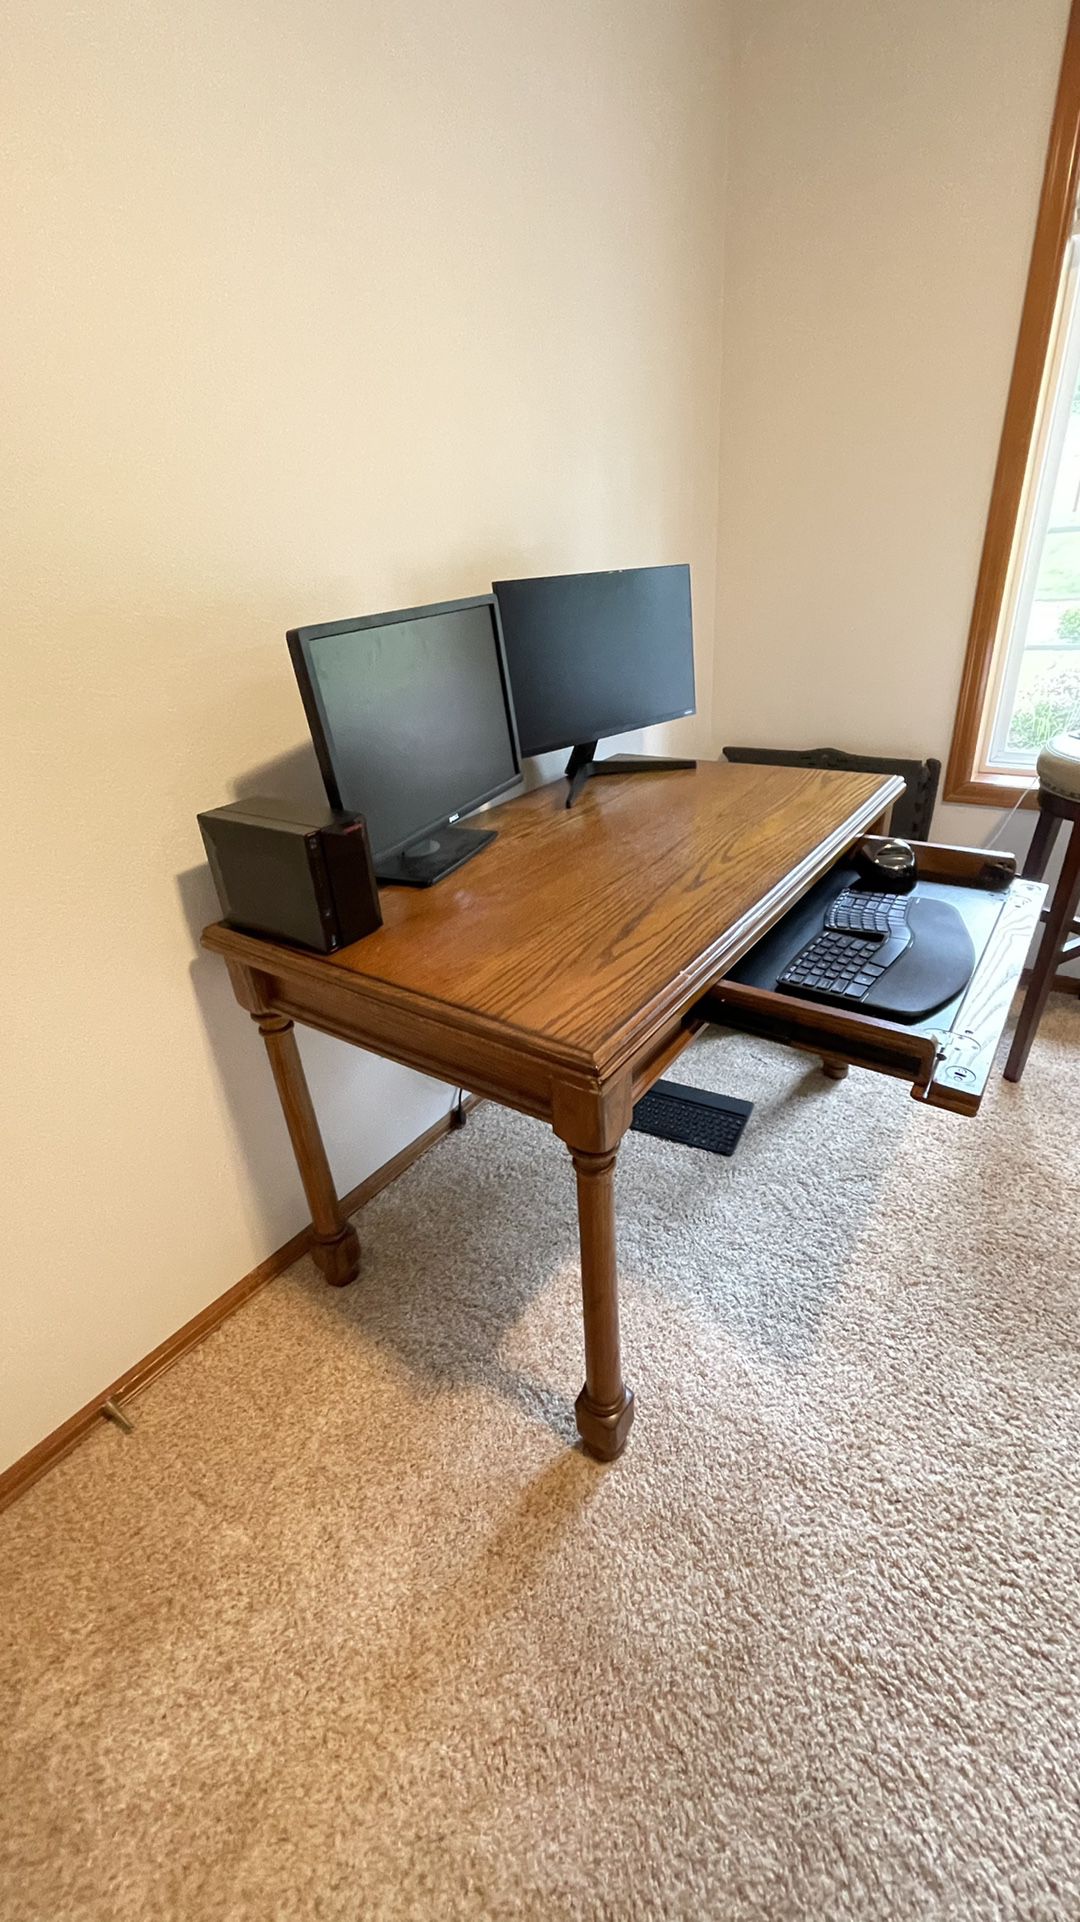 Ashley Furniture - Signature Series - Small Leg computer Desk- New = 275.00